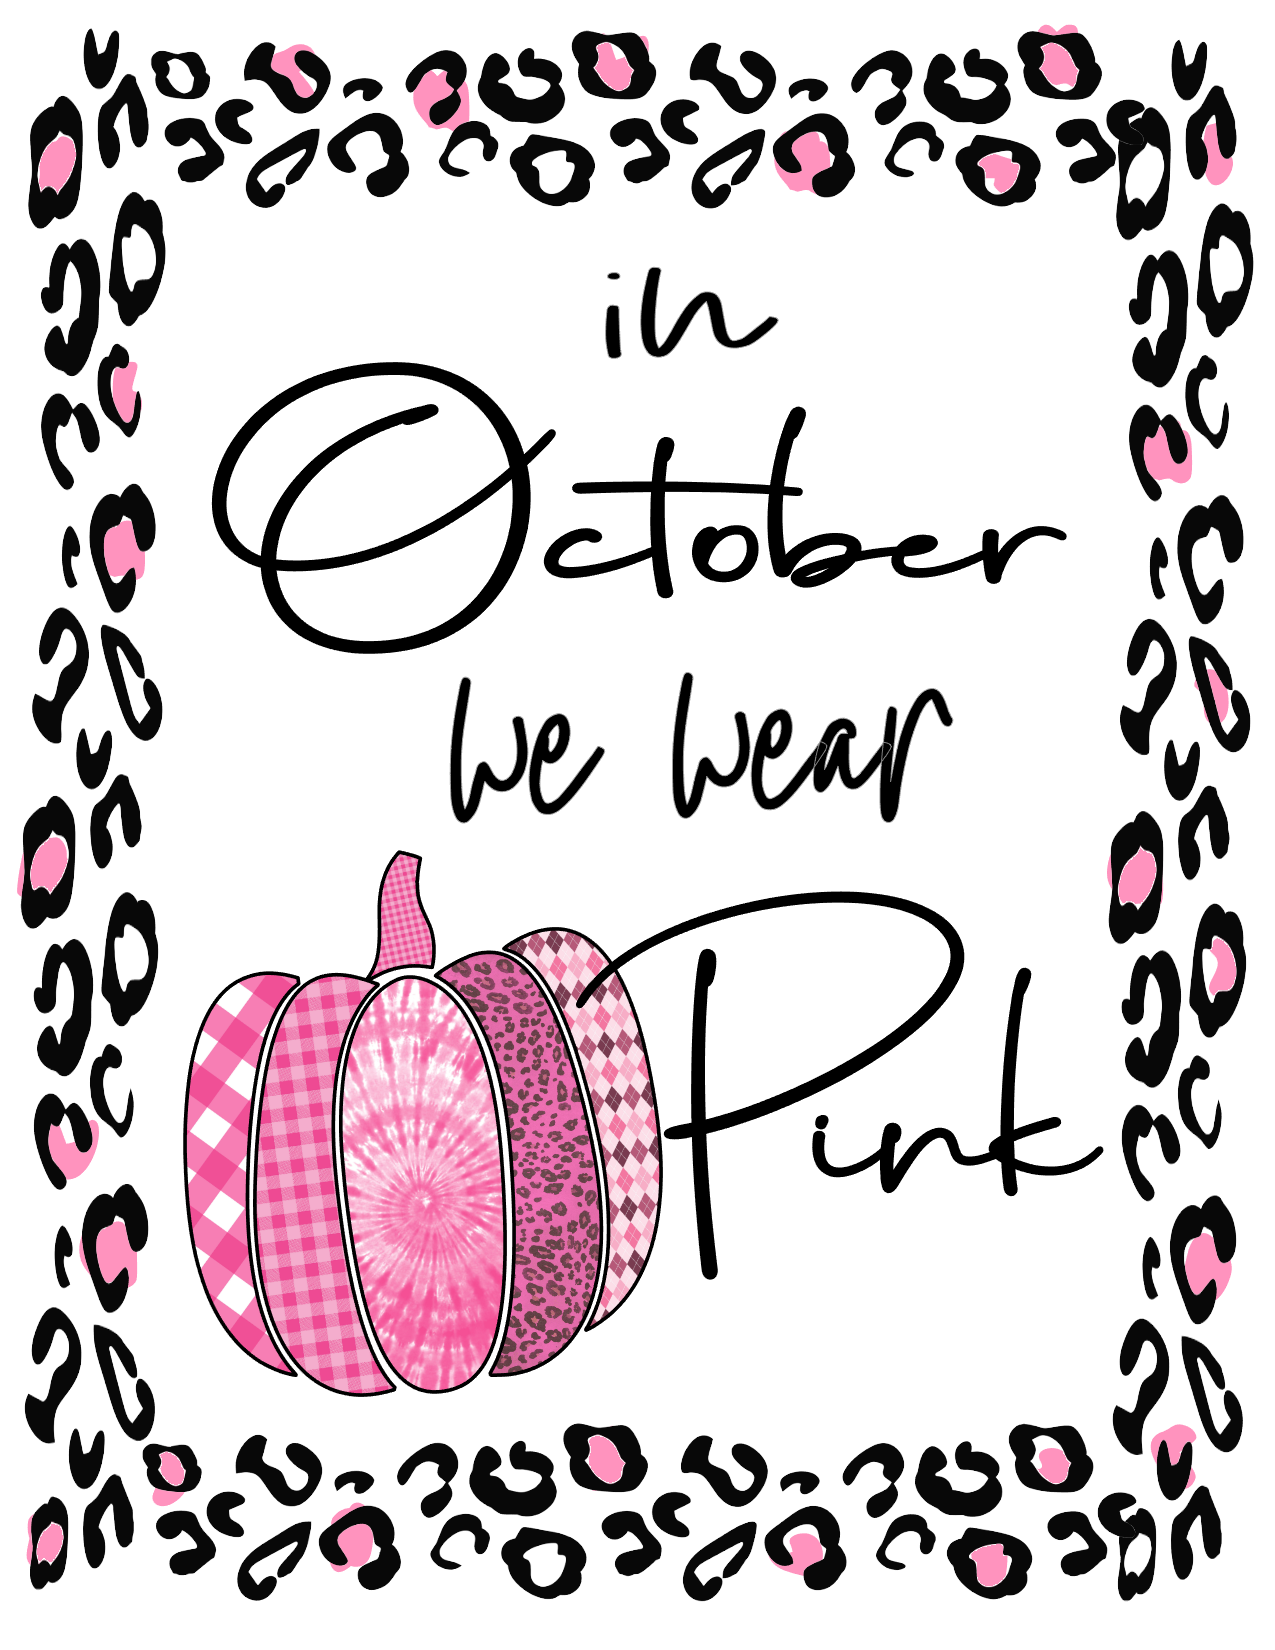 #137 In October We Wear Pink